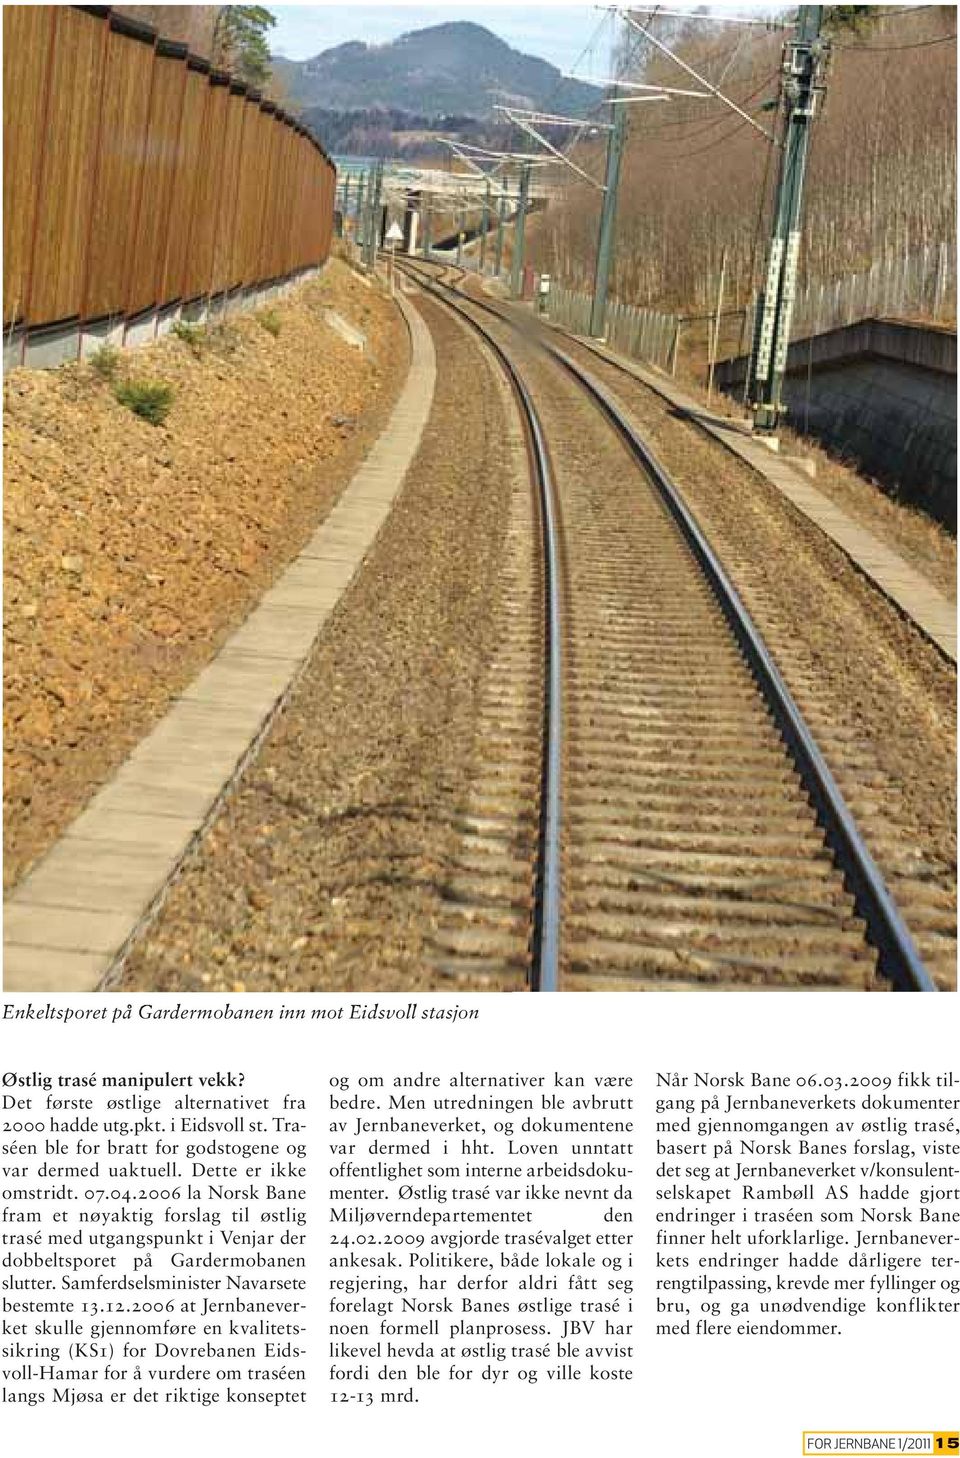 2006 la Norsk Bane fram et nøyaktig forslag til østlig trasé med utgangspunkt i Venjar der dobbeltsporet på Gardermobanen slutter. Samferdselsminister Navarsete bestemte 13.12.